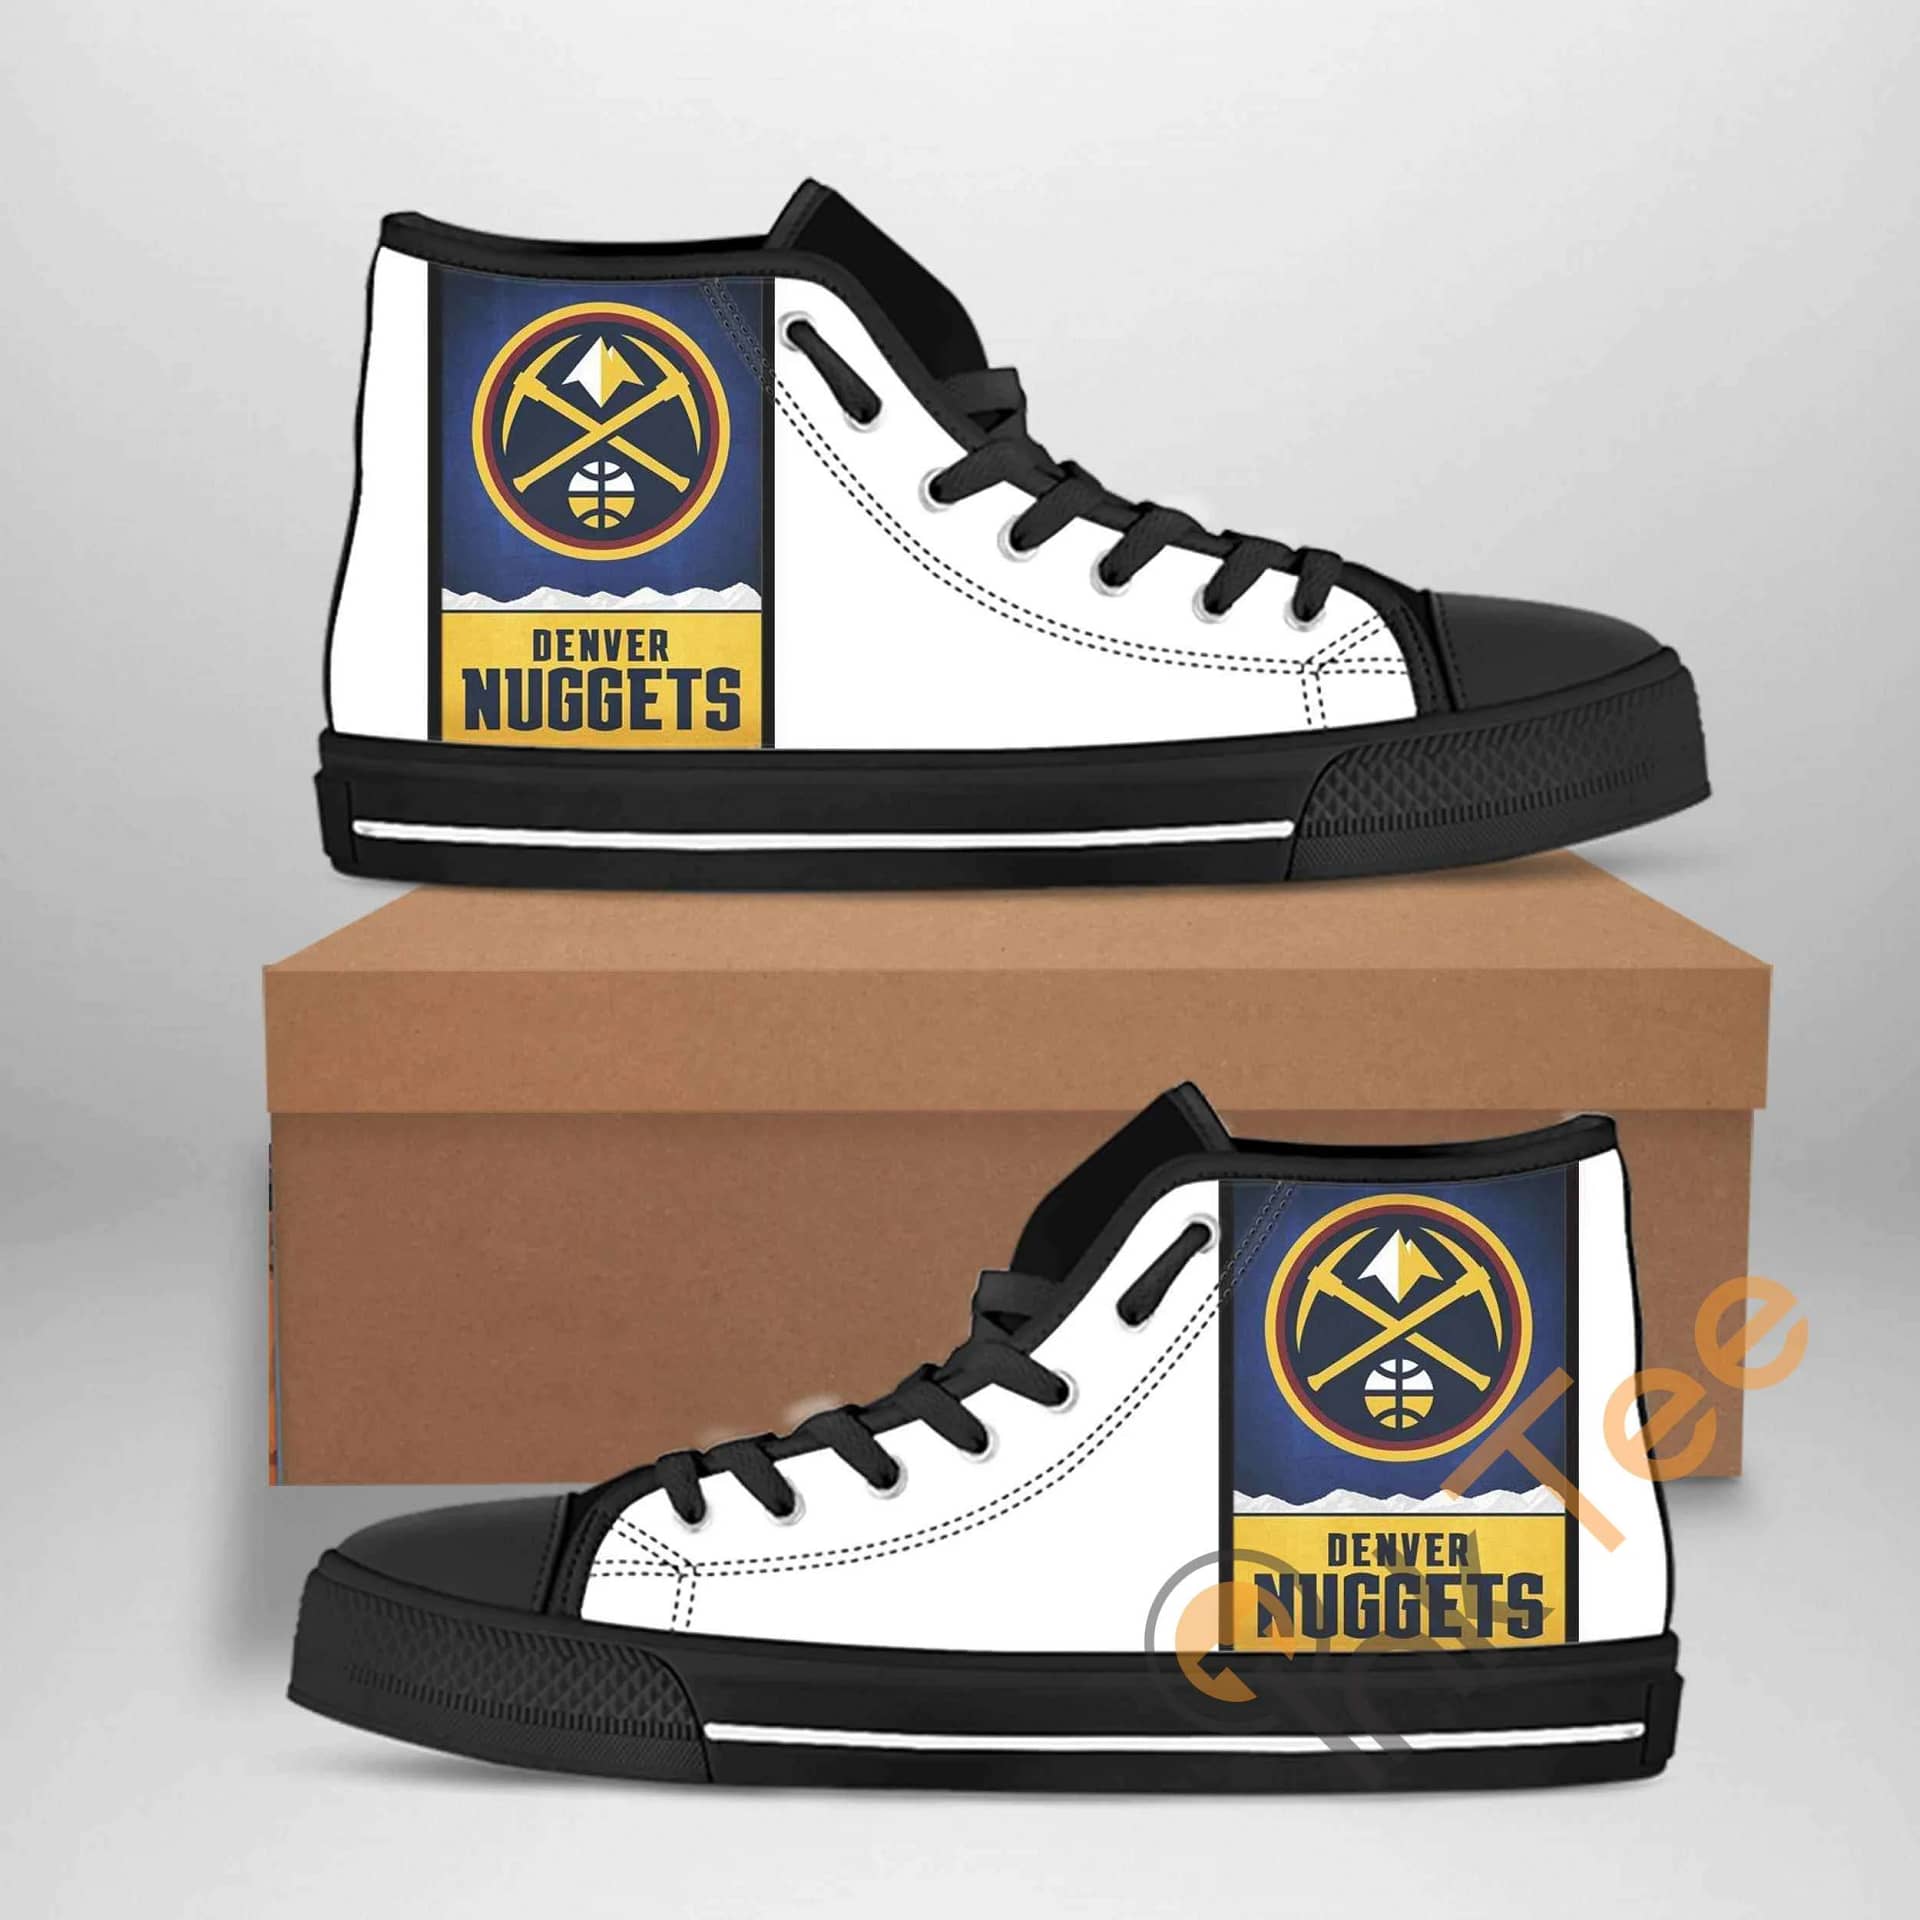 Denver Nuggets Nba Basketball Amazon Best Seller Sku 1526 High Top Shoes